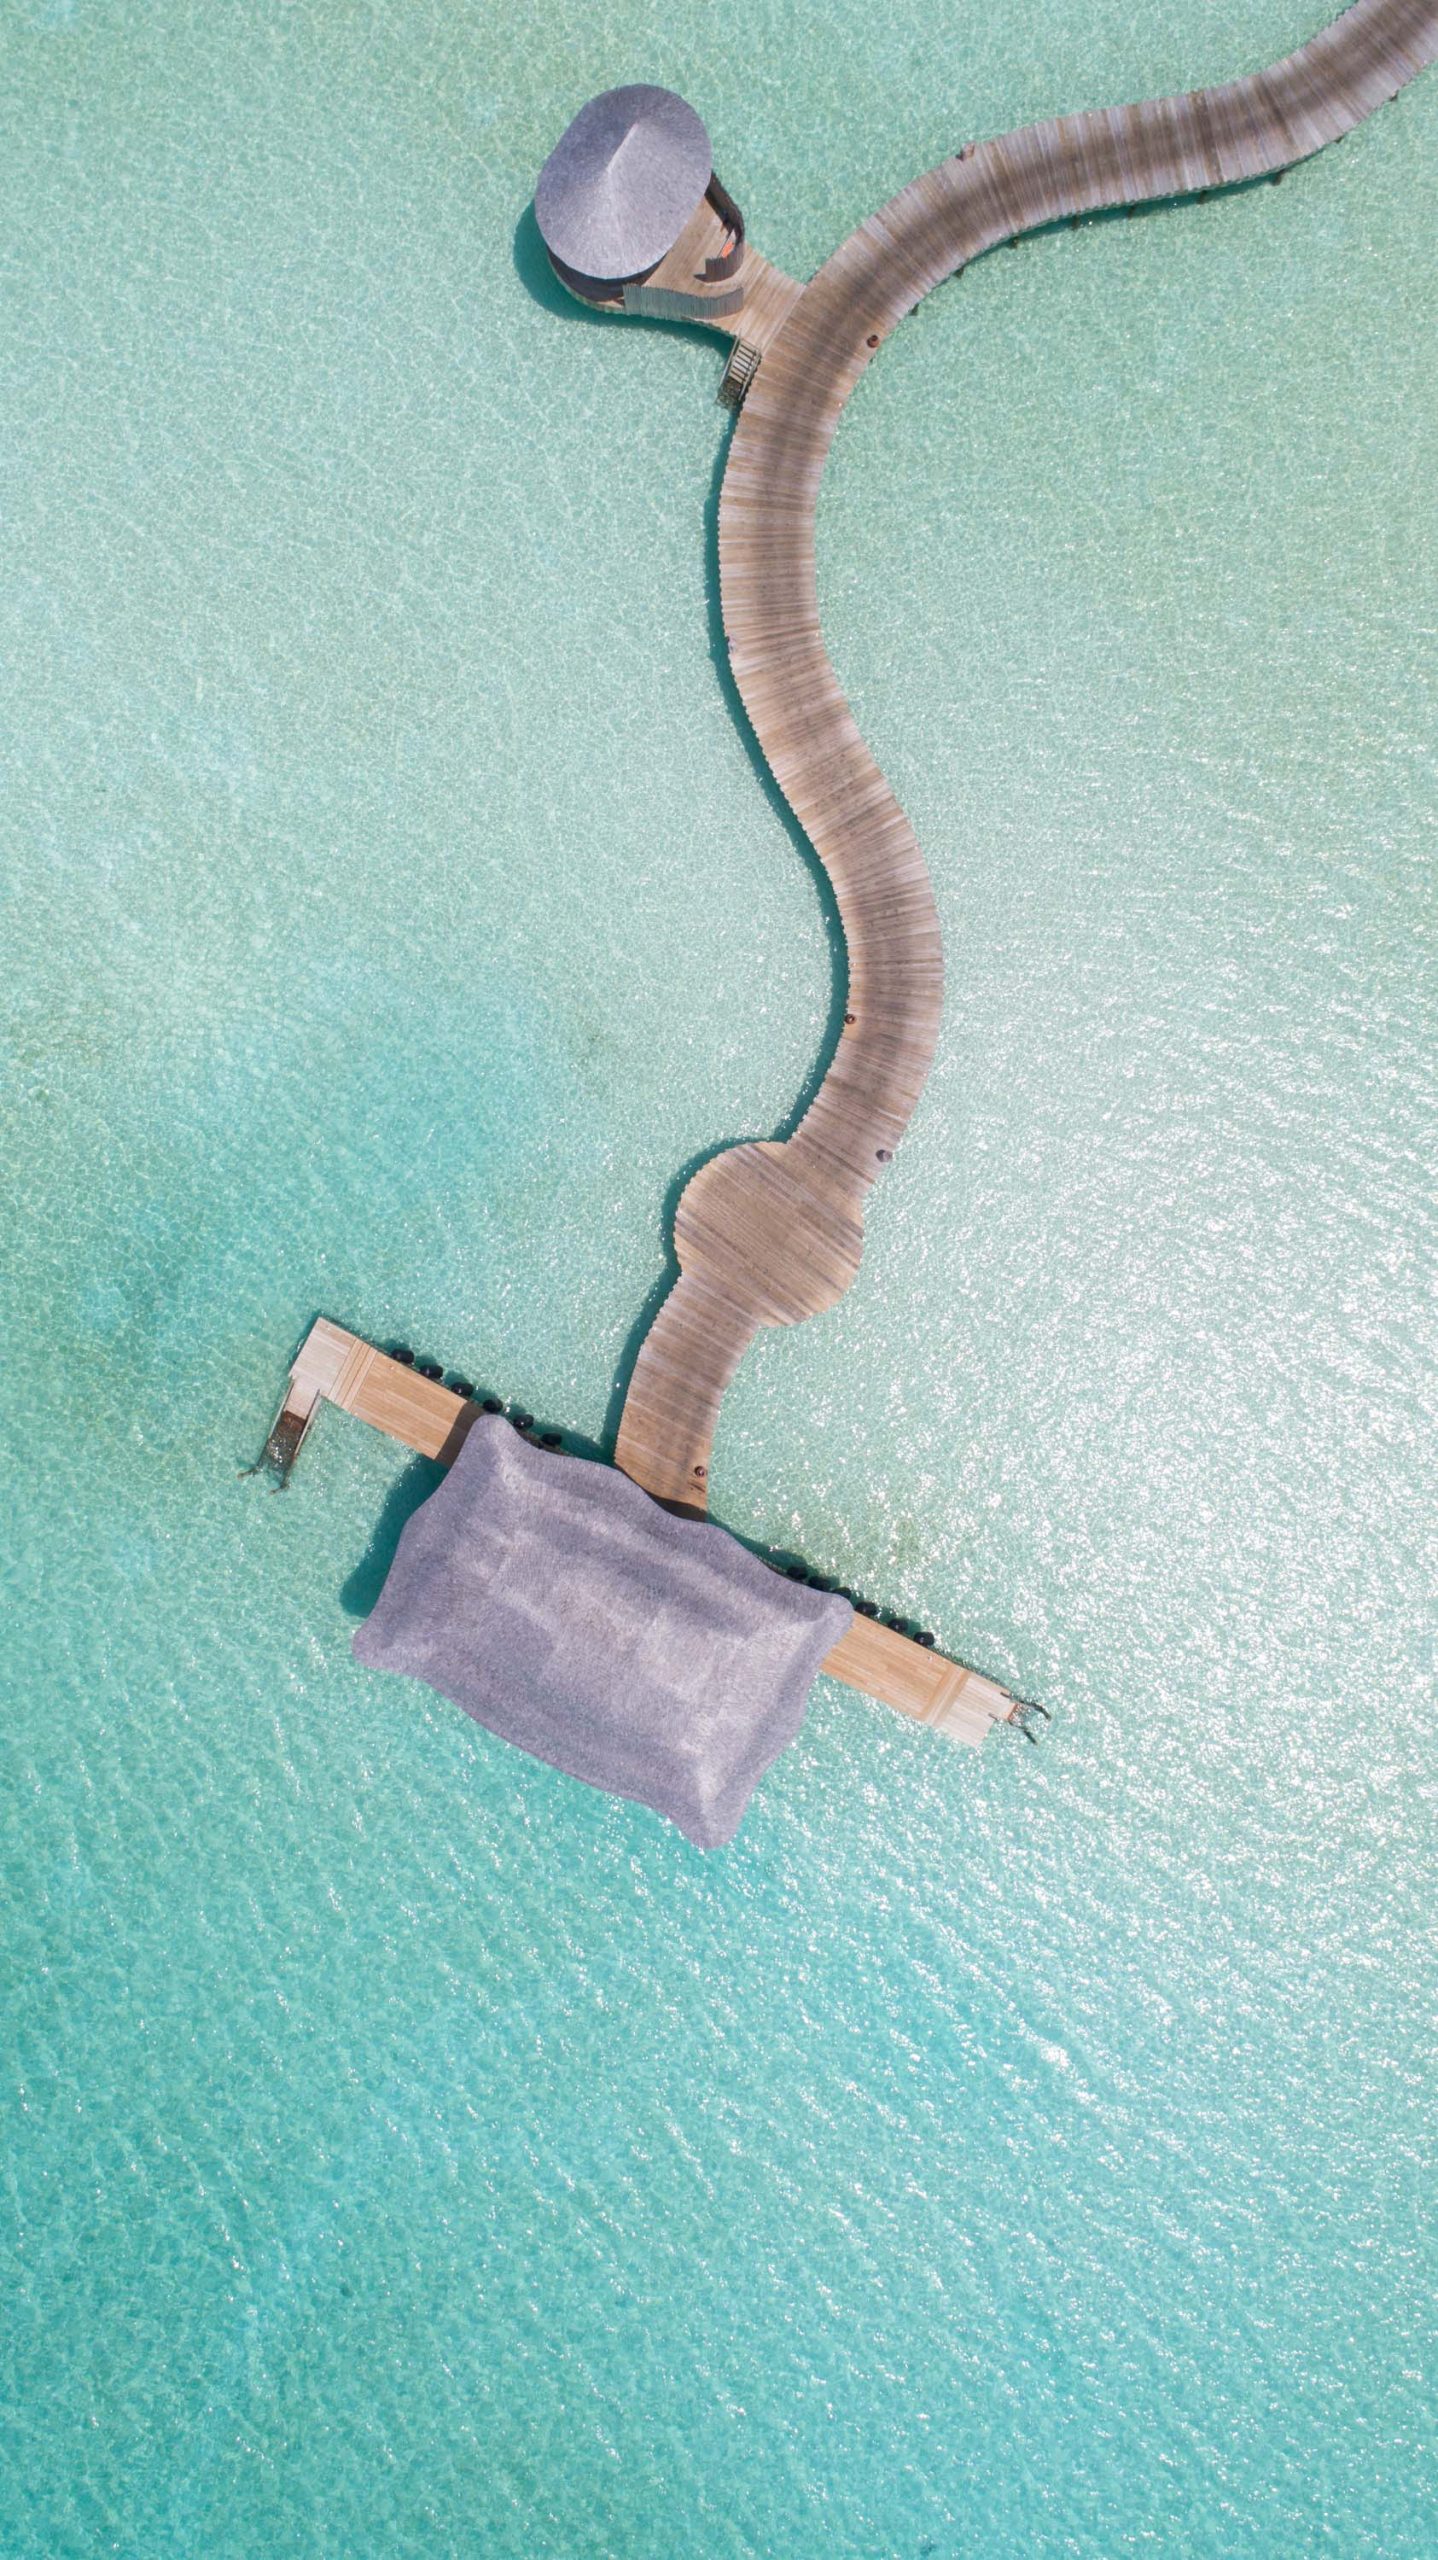 Soneva Jani Resort – Noonu Atoll, Medhufaru, Maldives – Tropical Ocean Water Jetty Boardwalk Overhead Aerial